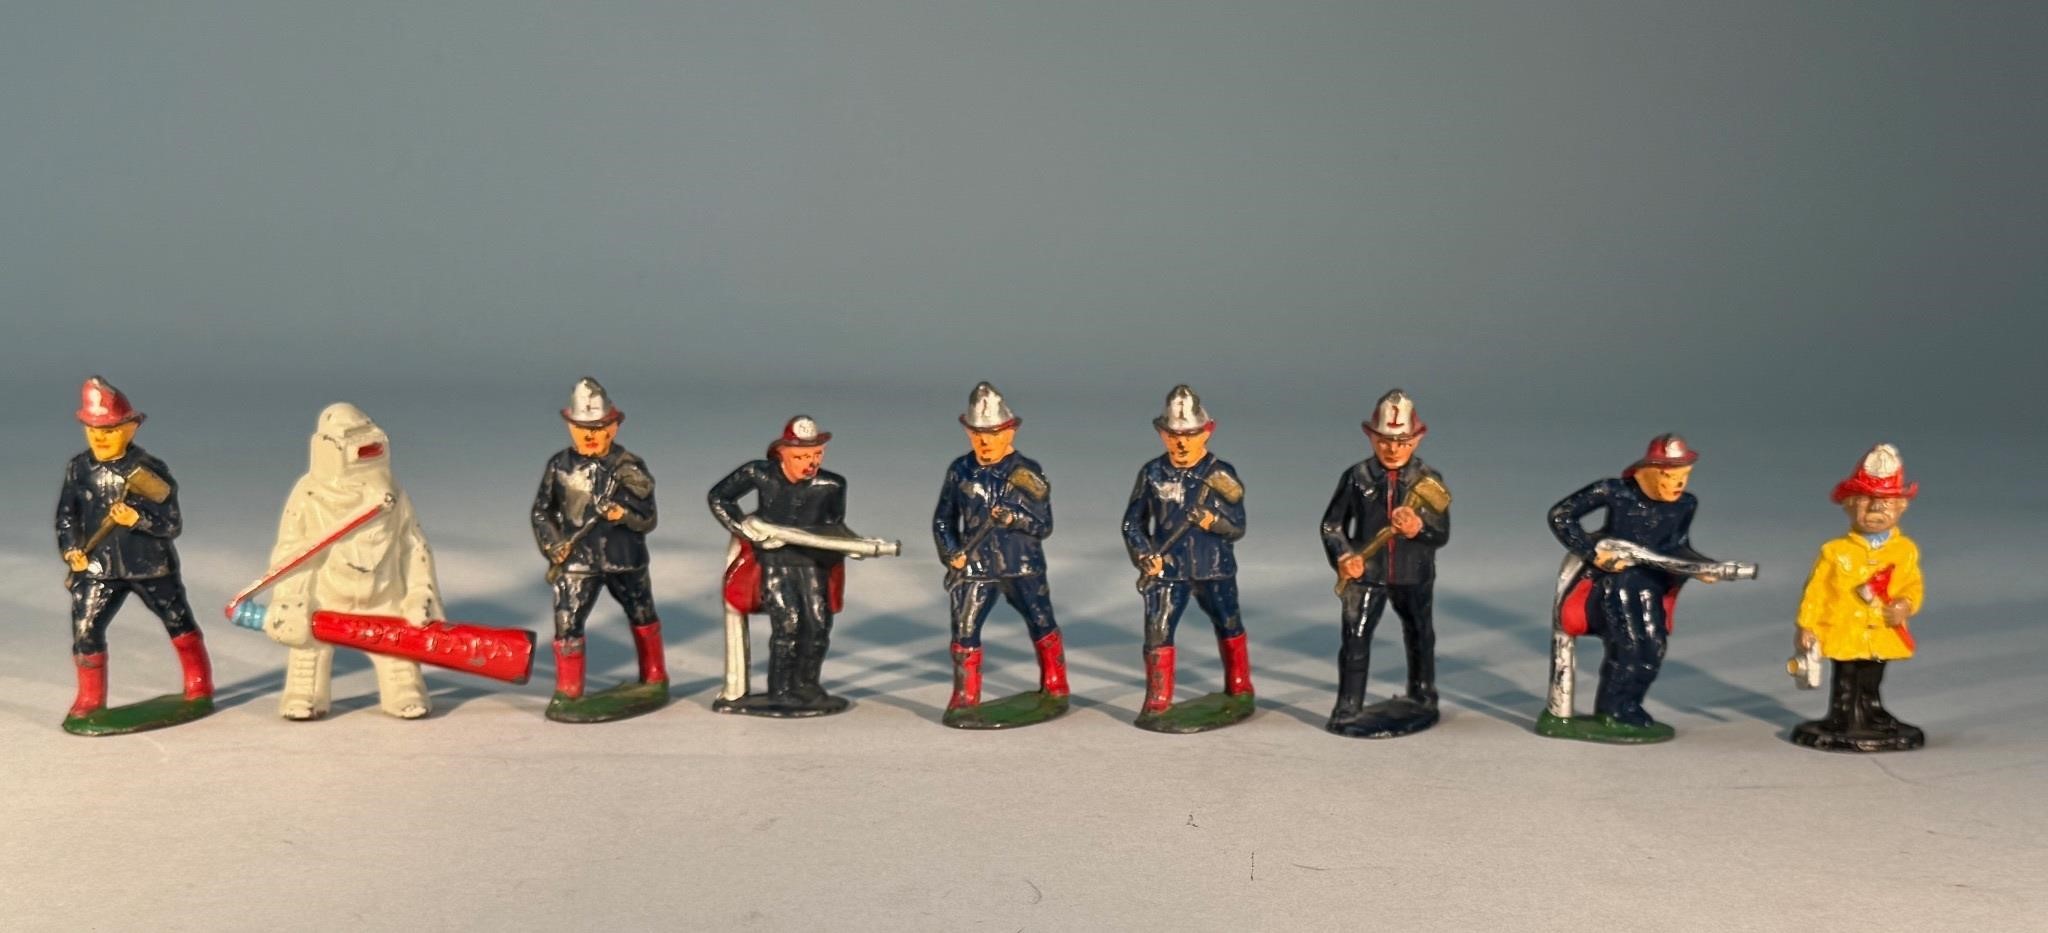 9 Metal Fireman Figurines